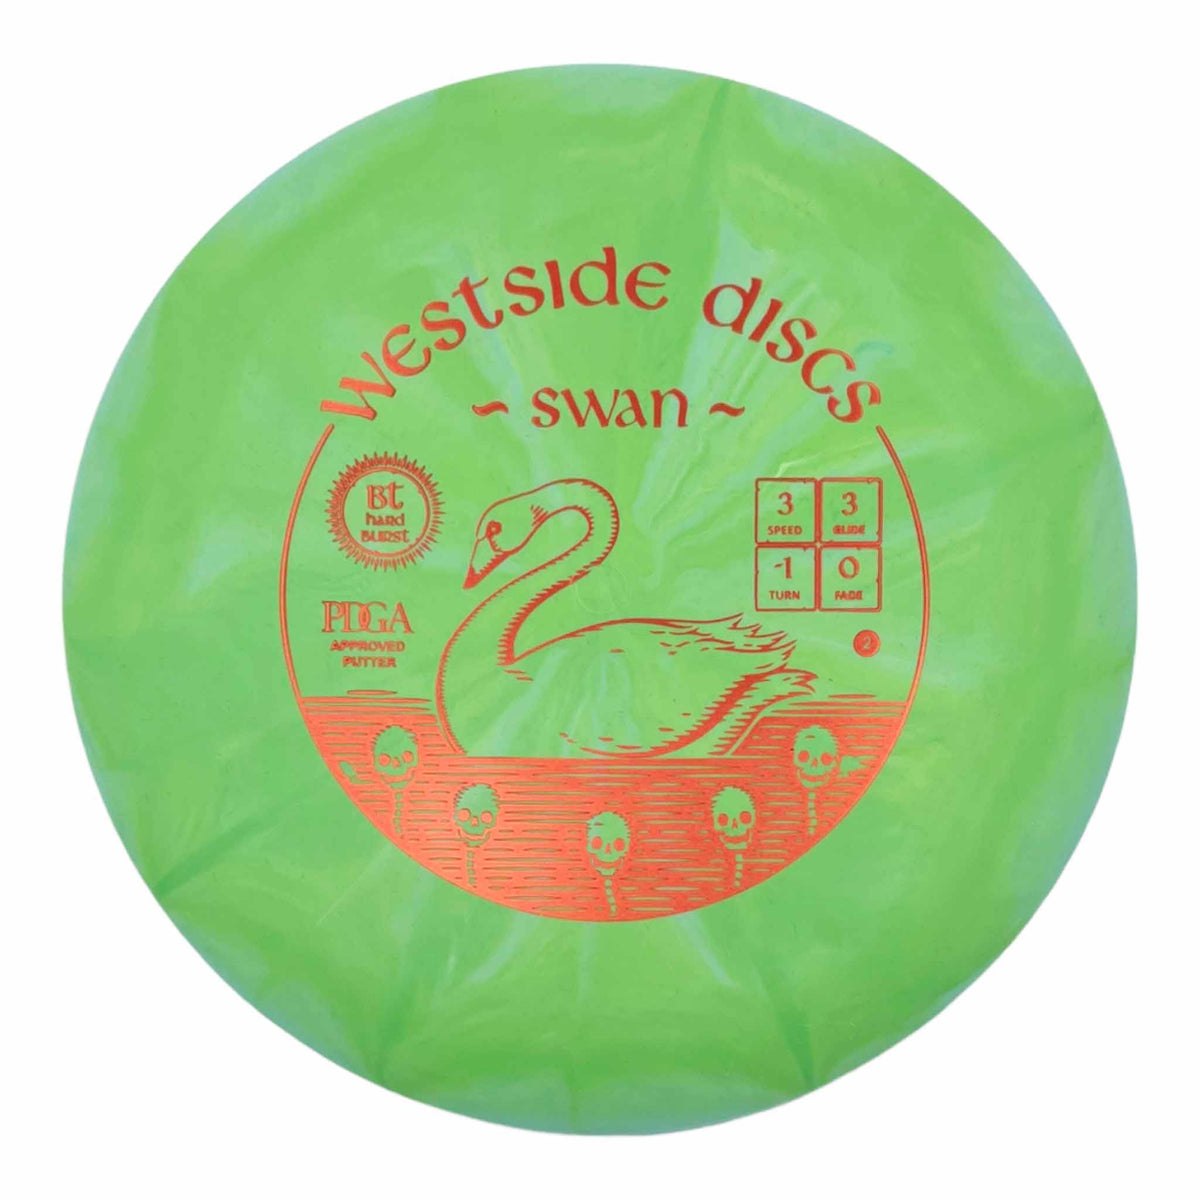 Westside Discs BT Hard Burst Swan putter and approach - Green